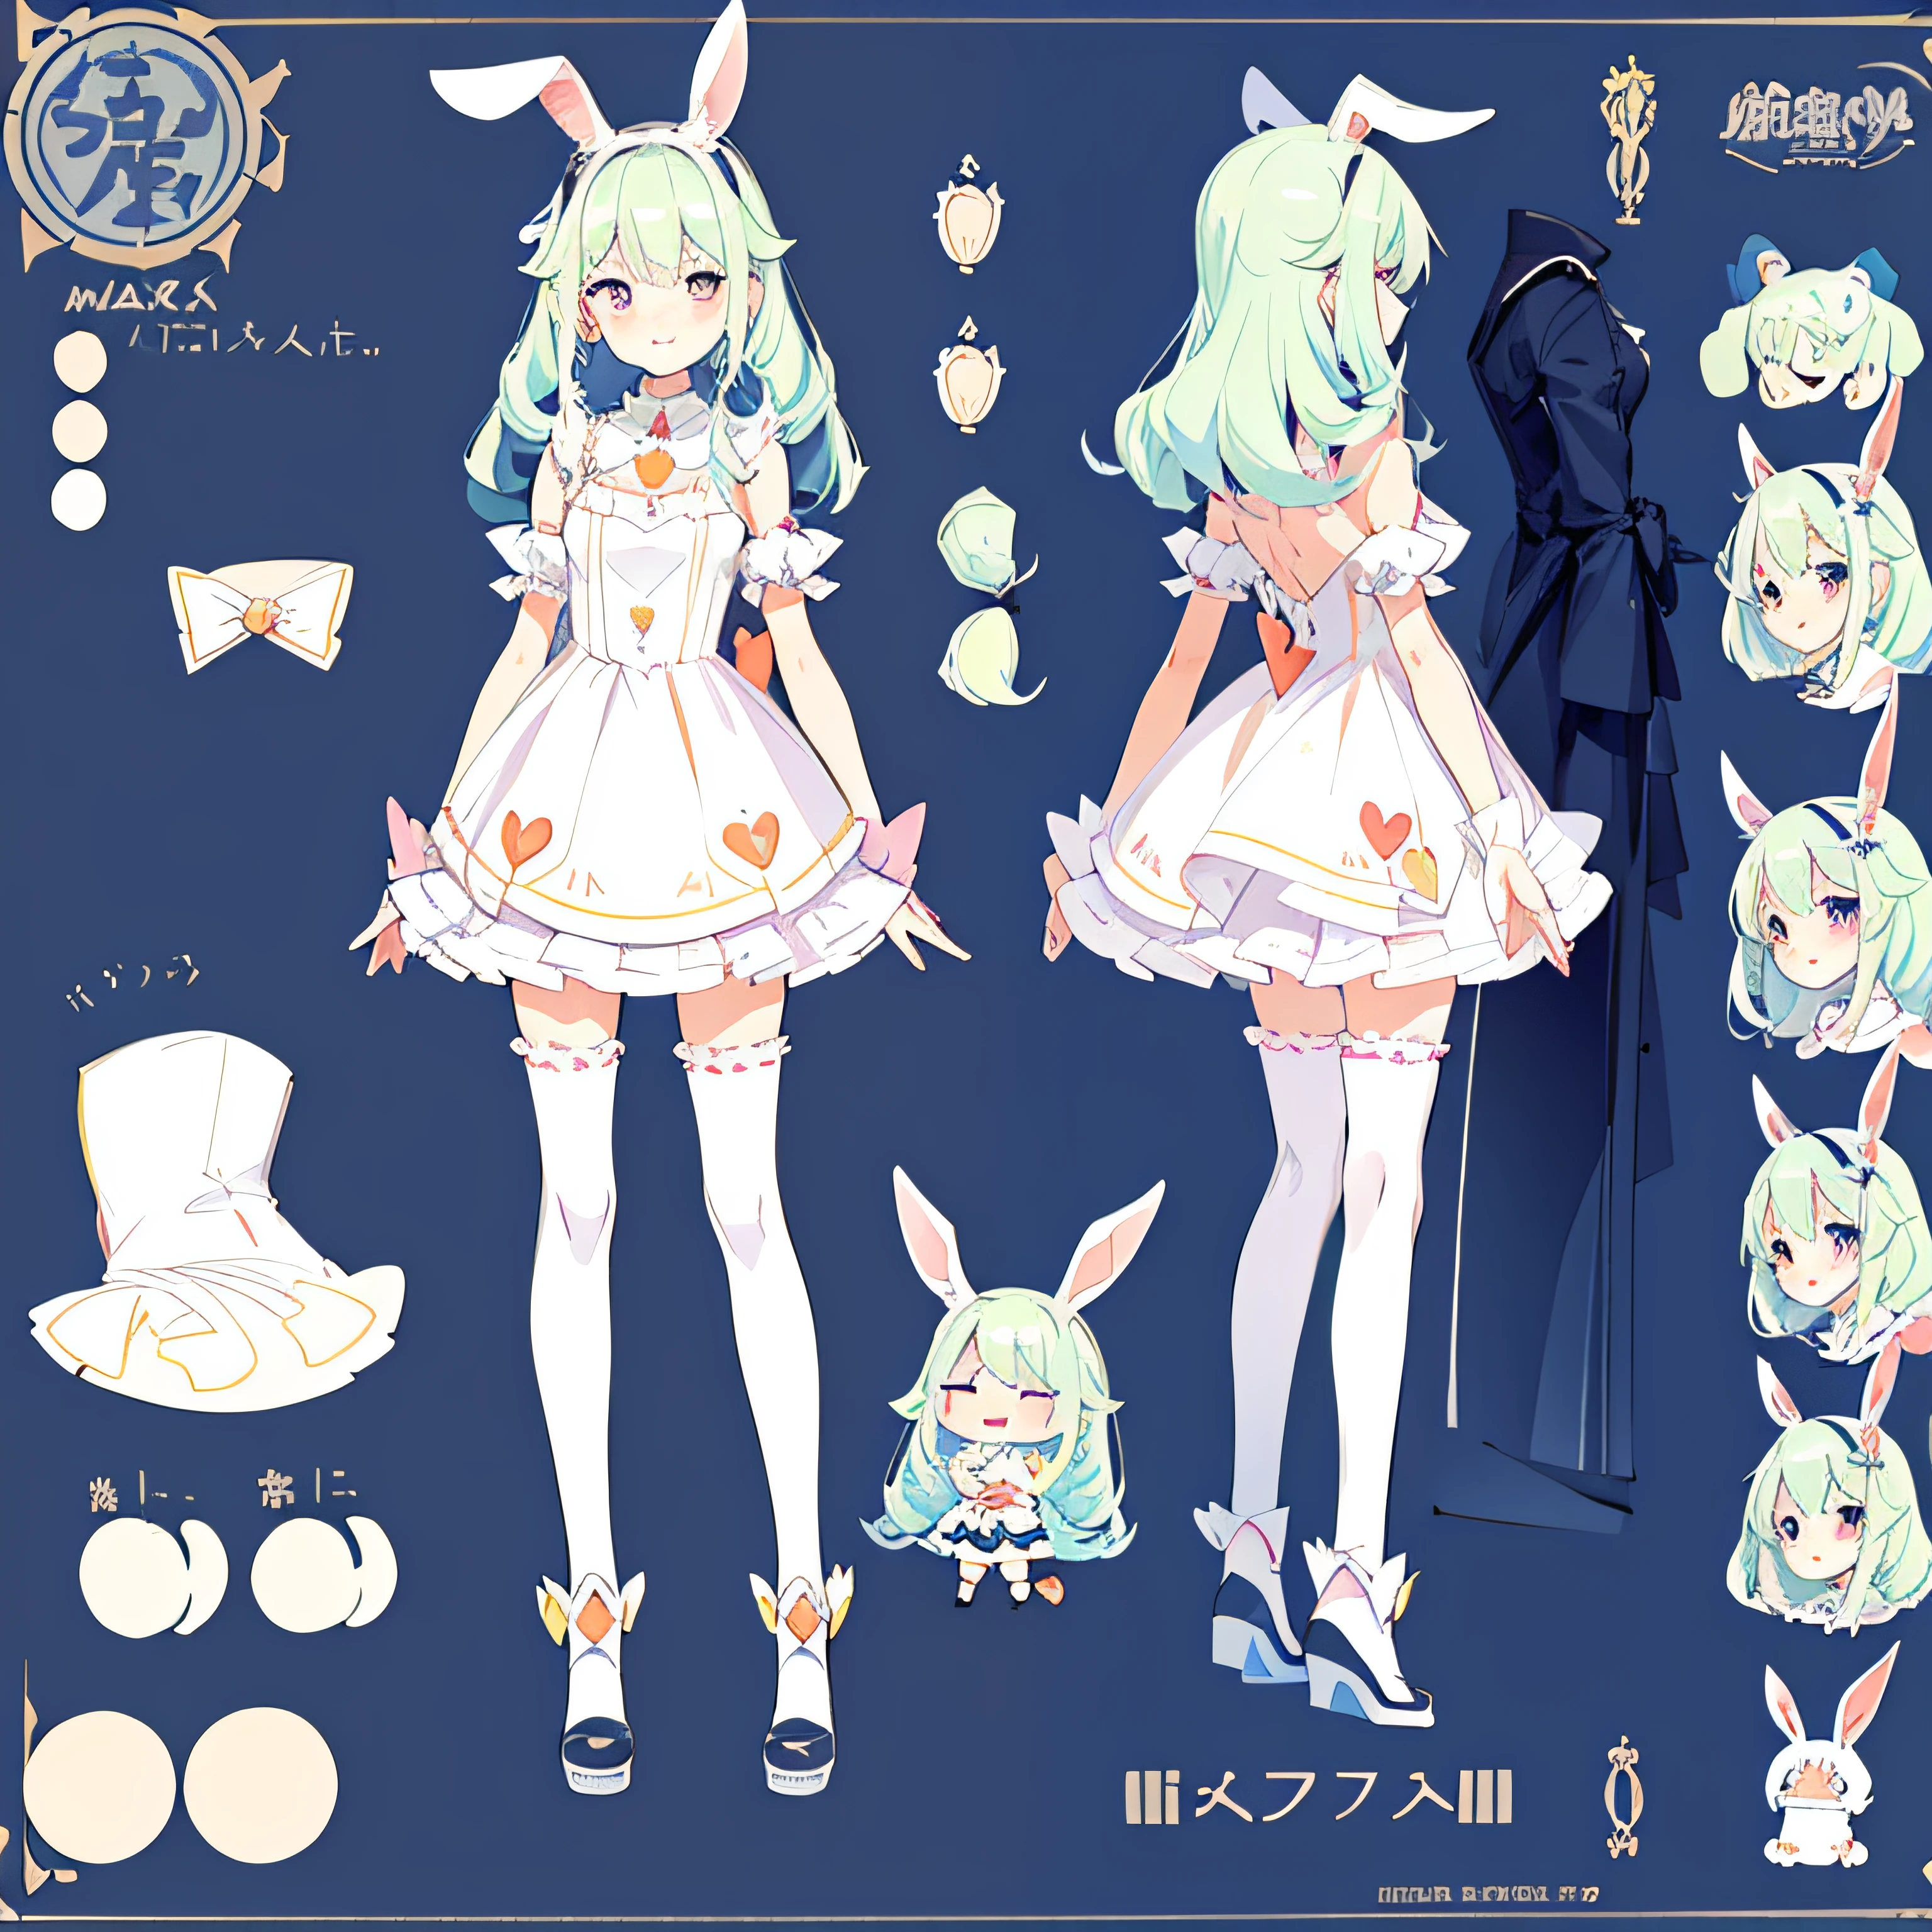 Rabbit-eared girl　(Maximum softness:1.2),(Cute illustration:1.2), (Character Sheet:1.4), (Concept art:1.3)